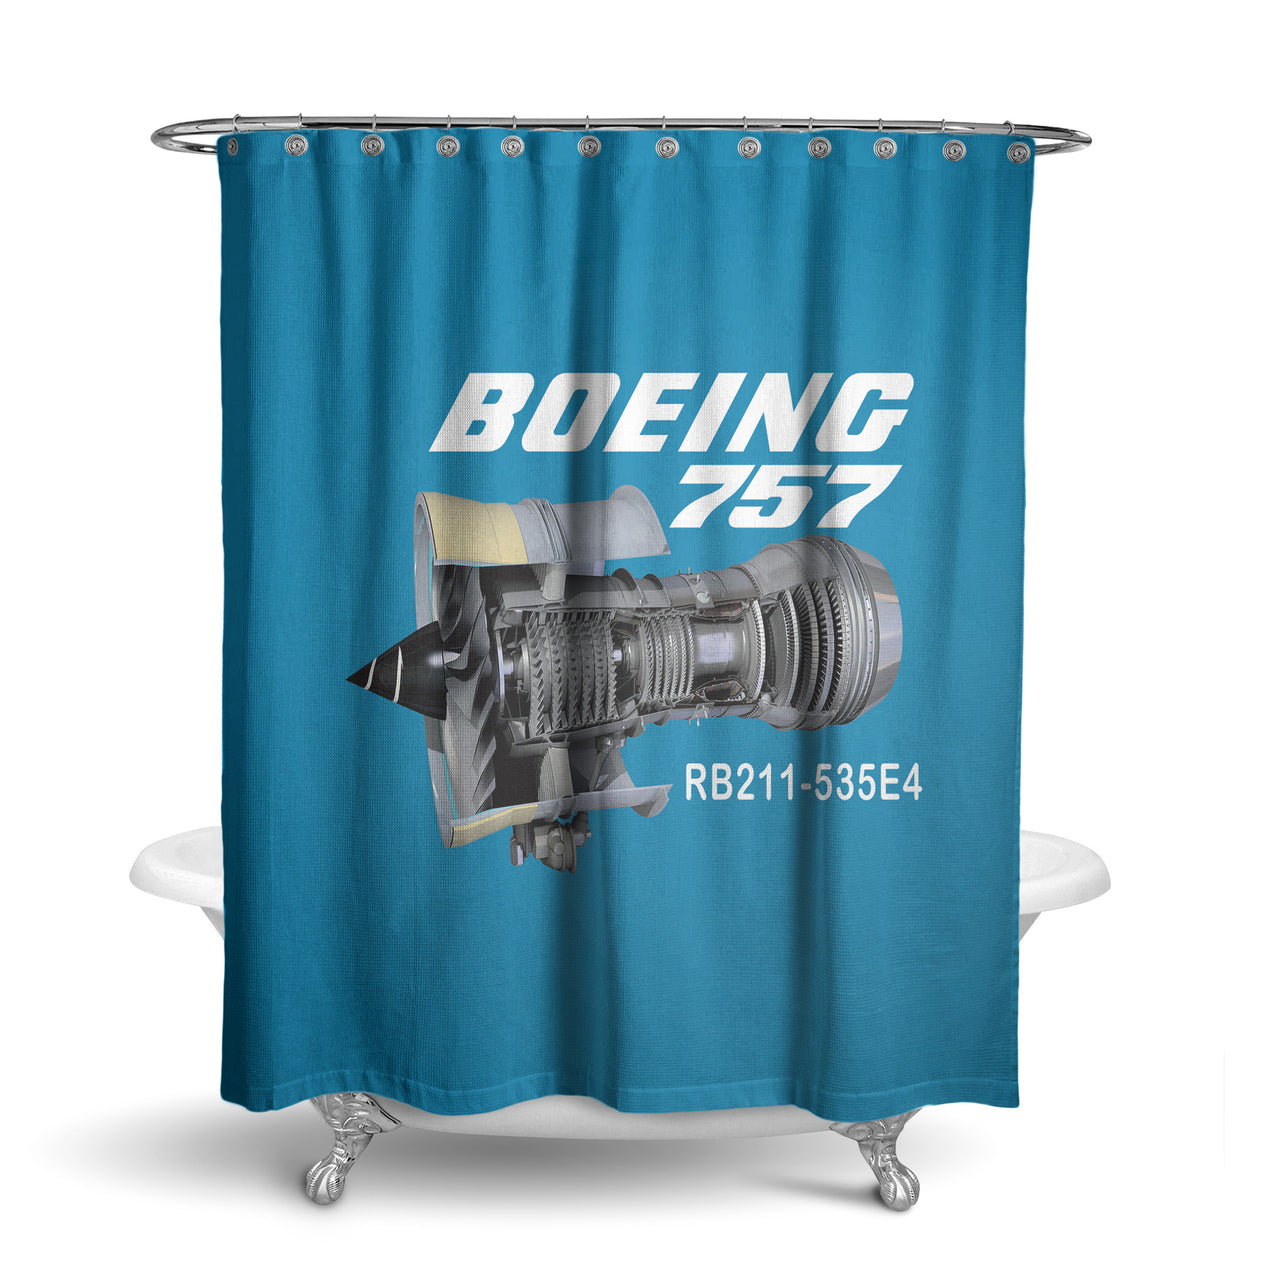 Boeing 757 & Rolls Royce Engine (RB211) Designed Shower Curtains